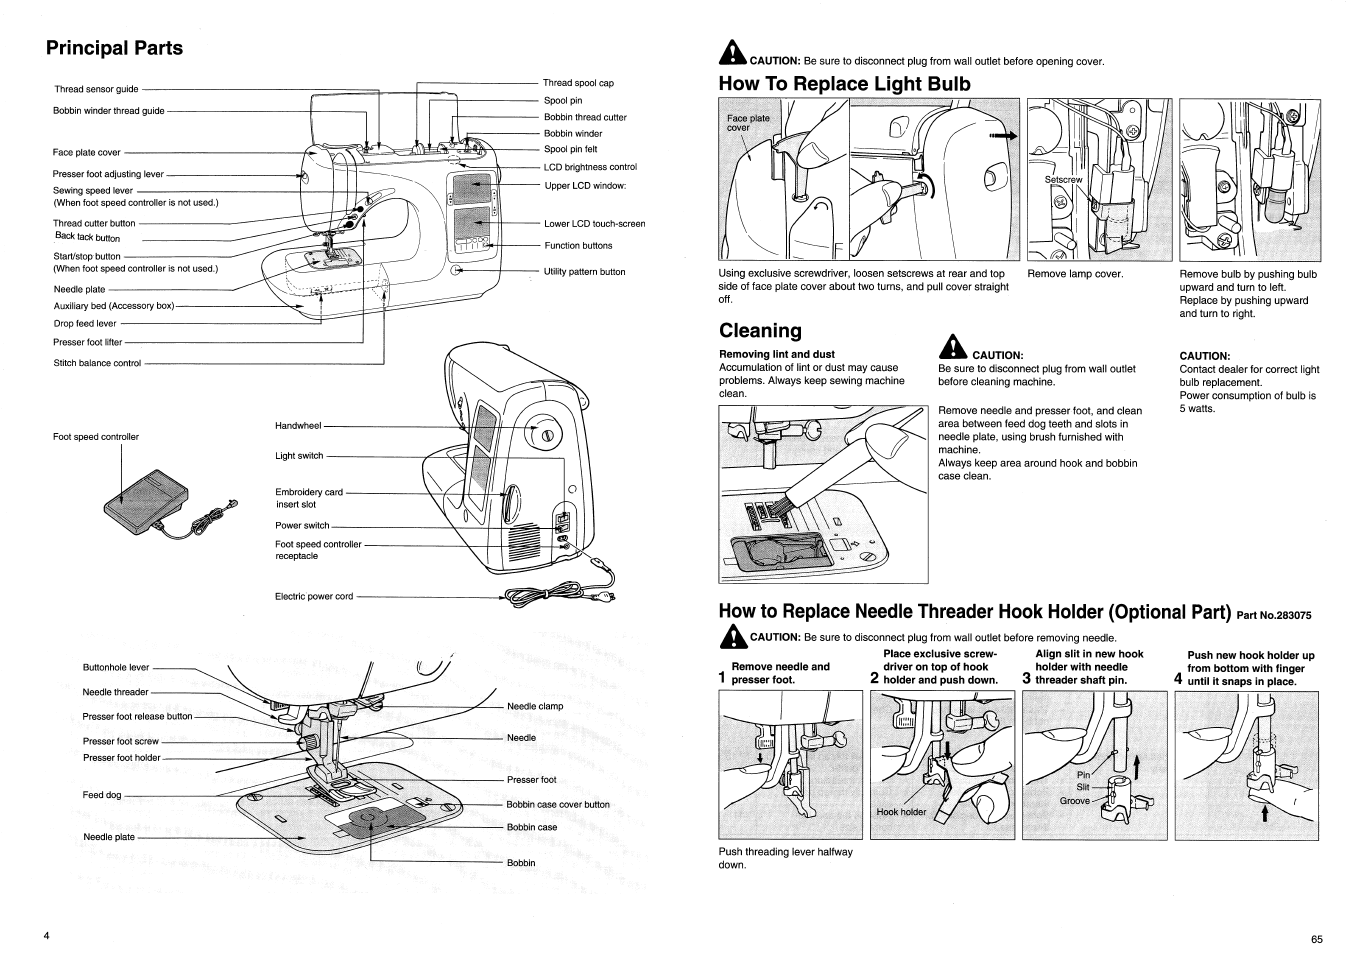 Principal parts, Principal parts ,5 | SINGER XL100 Quantum User Manual | Page 6 / 72